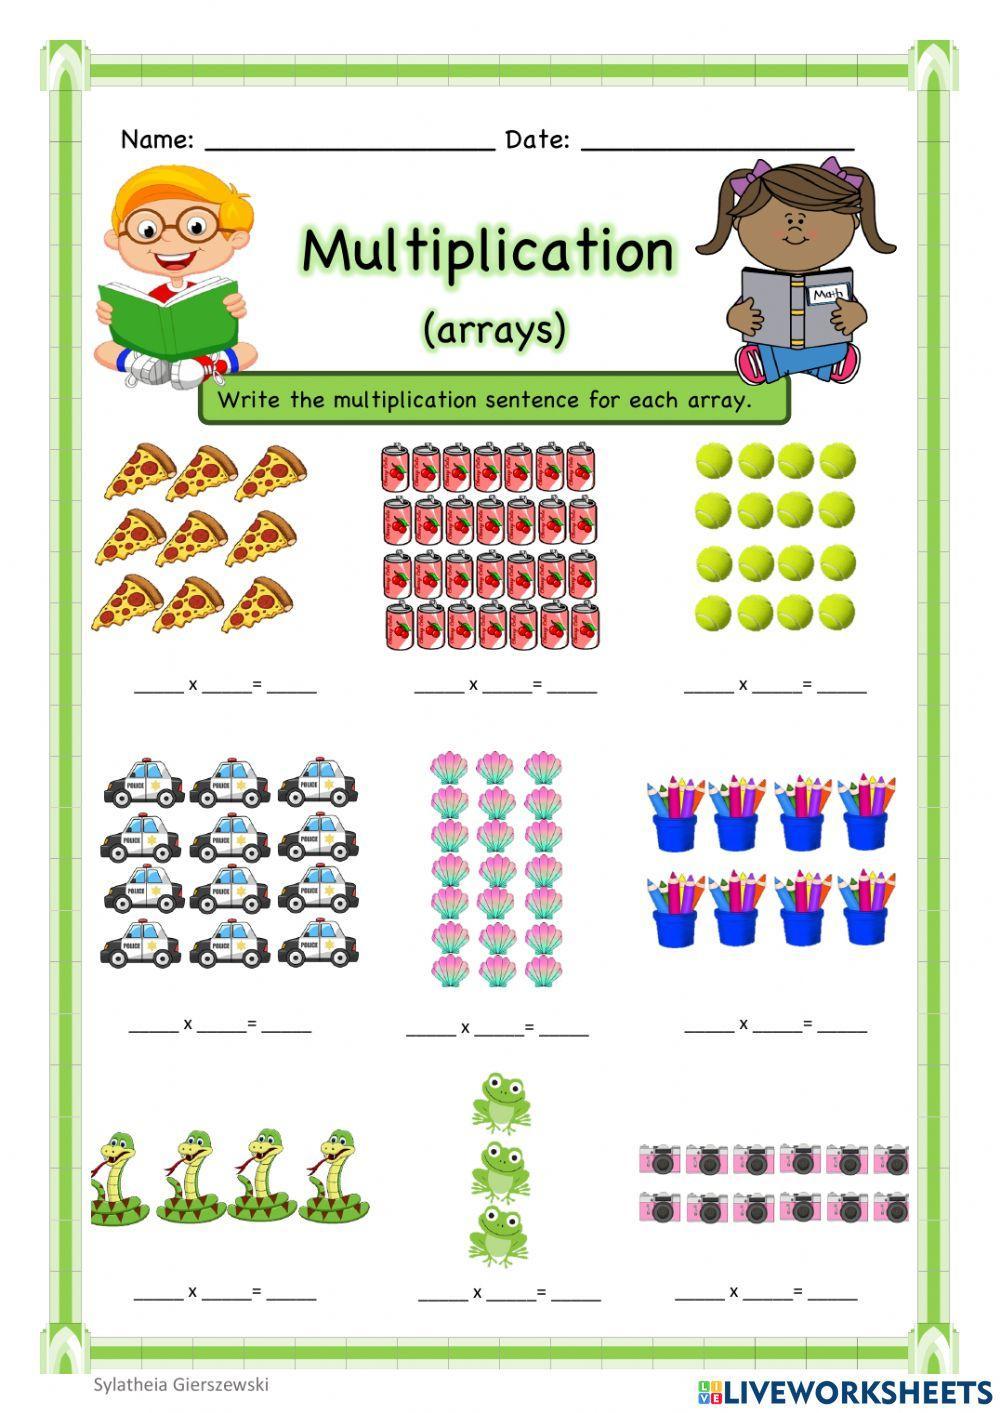 Multiplication (arrays)